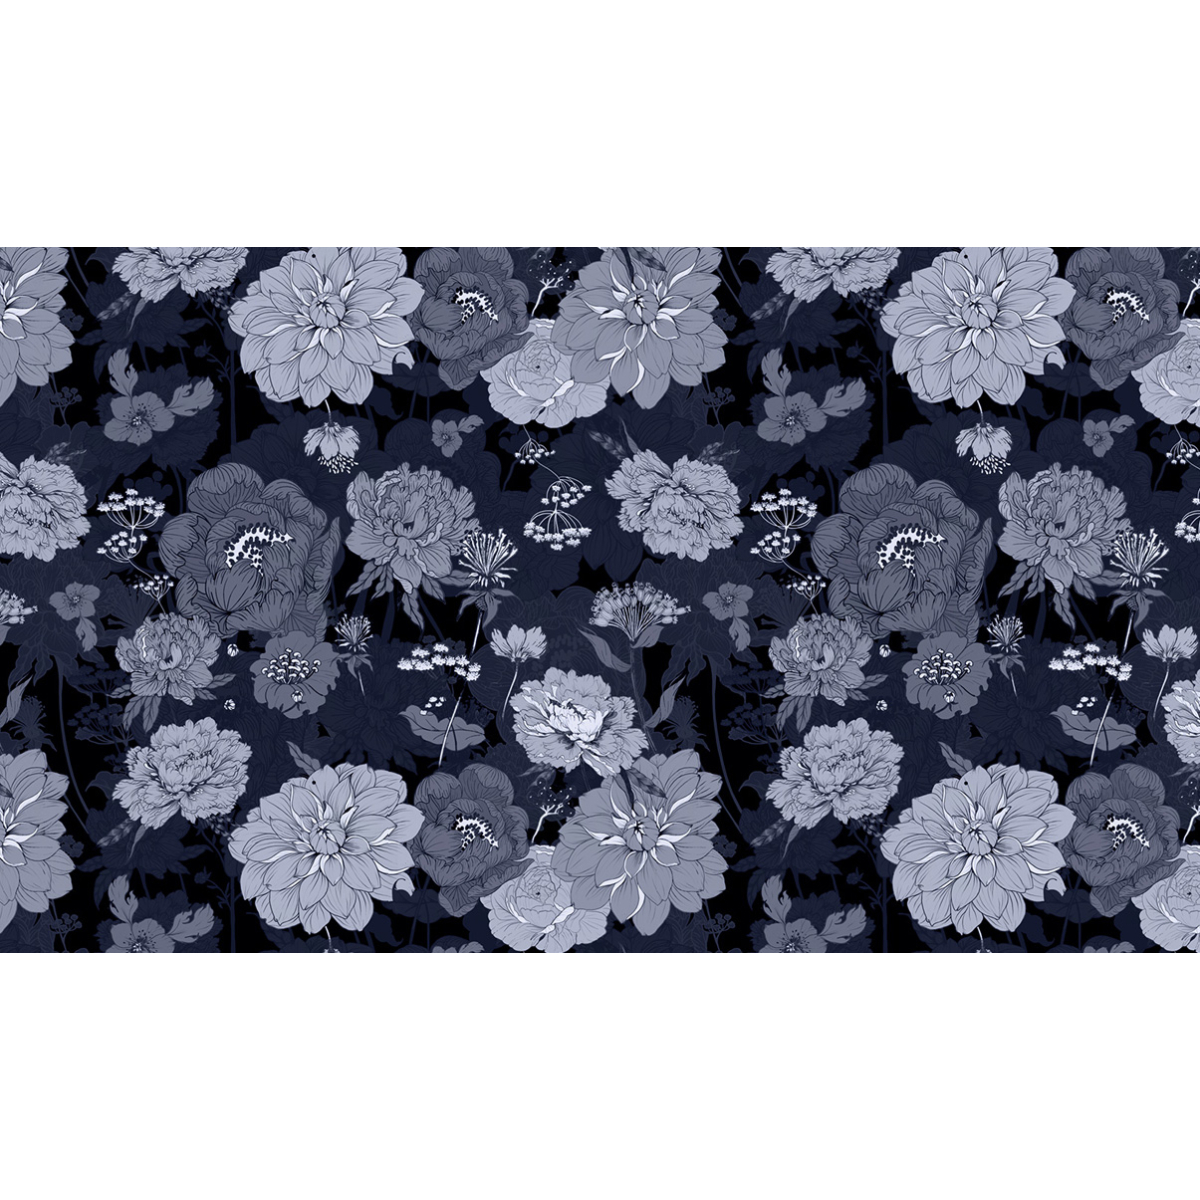 Panoramic wallpaper - Violette - Collection Acte-Deco